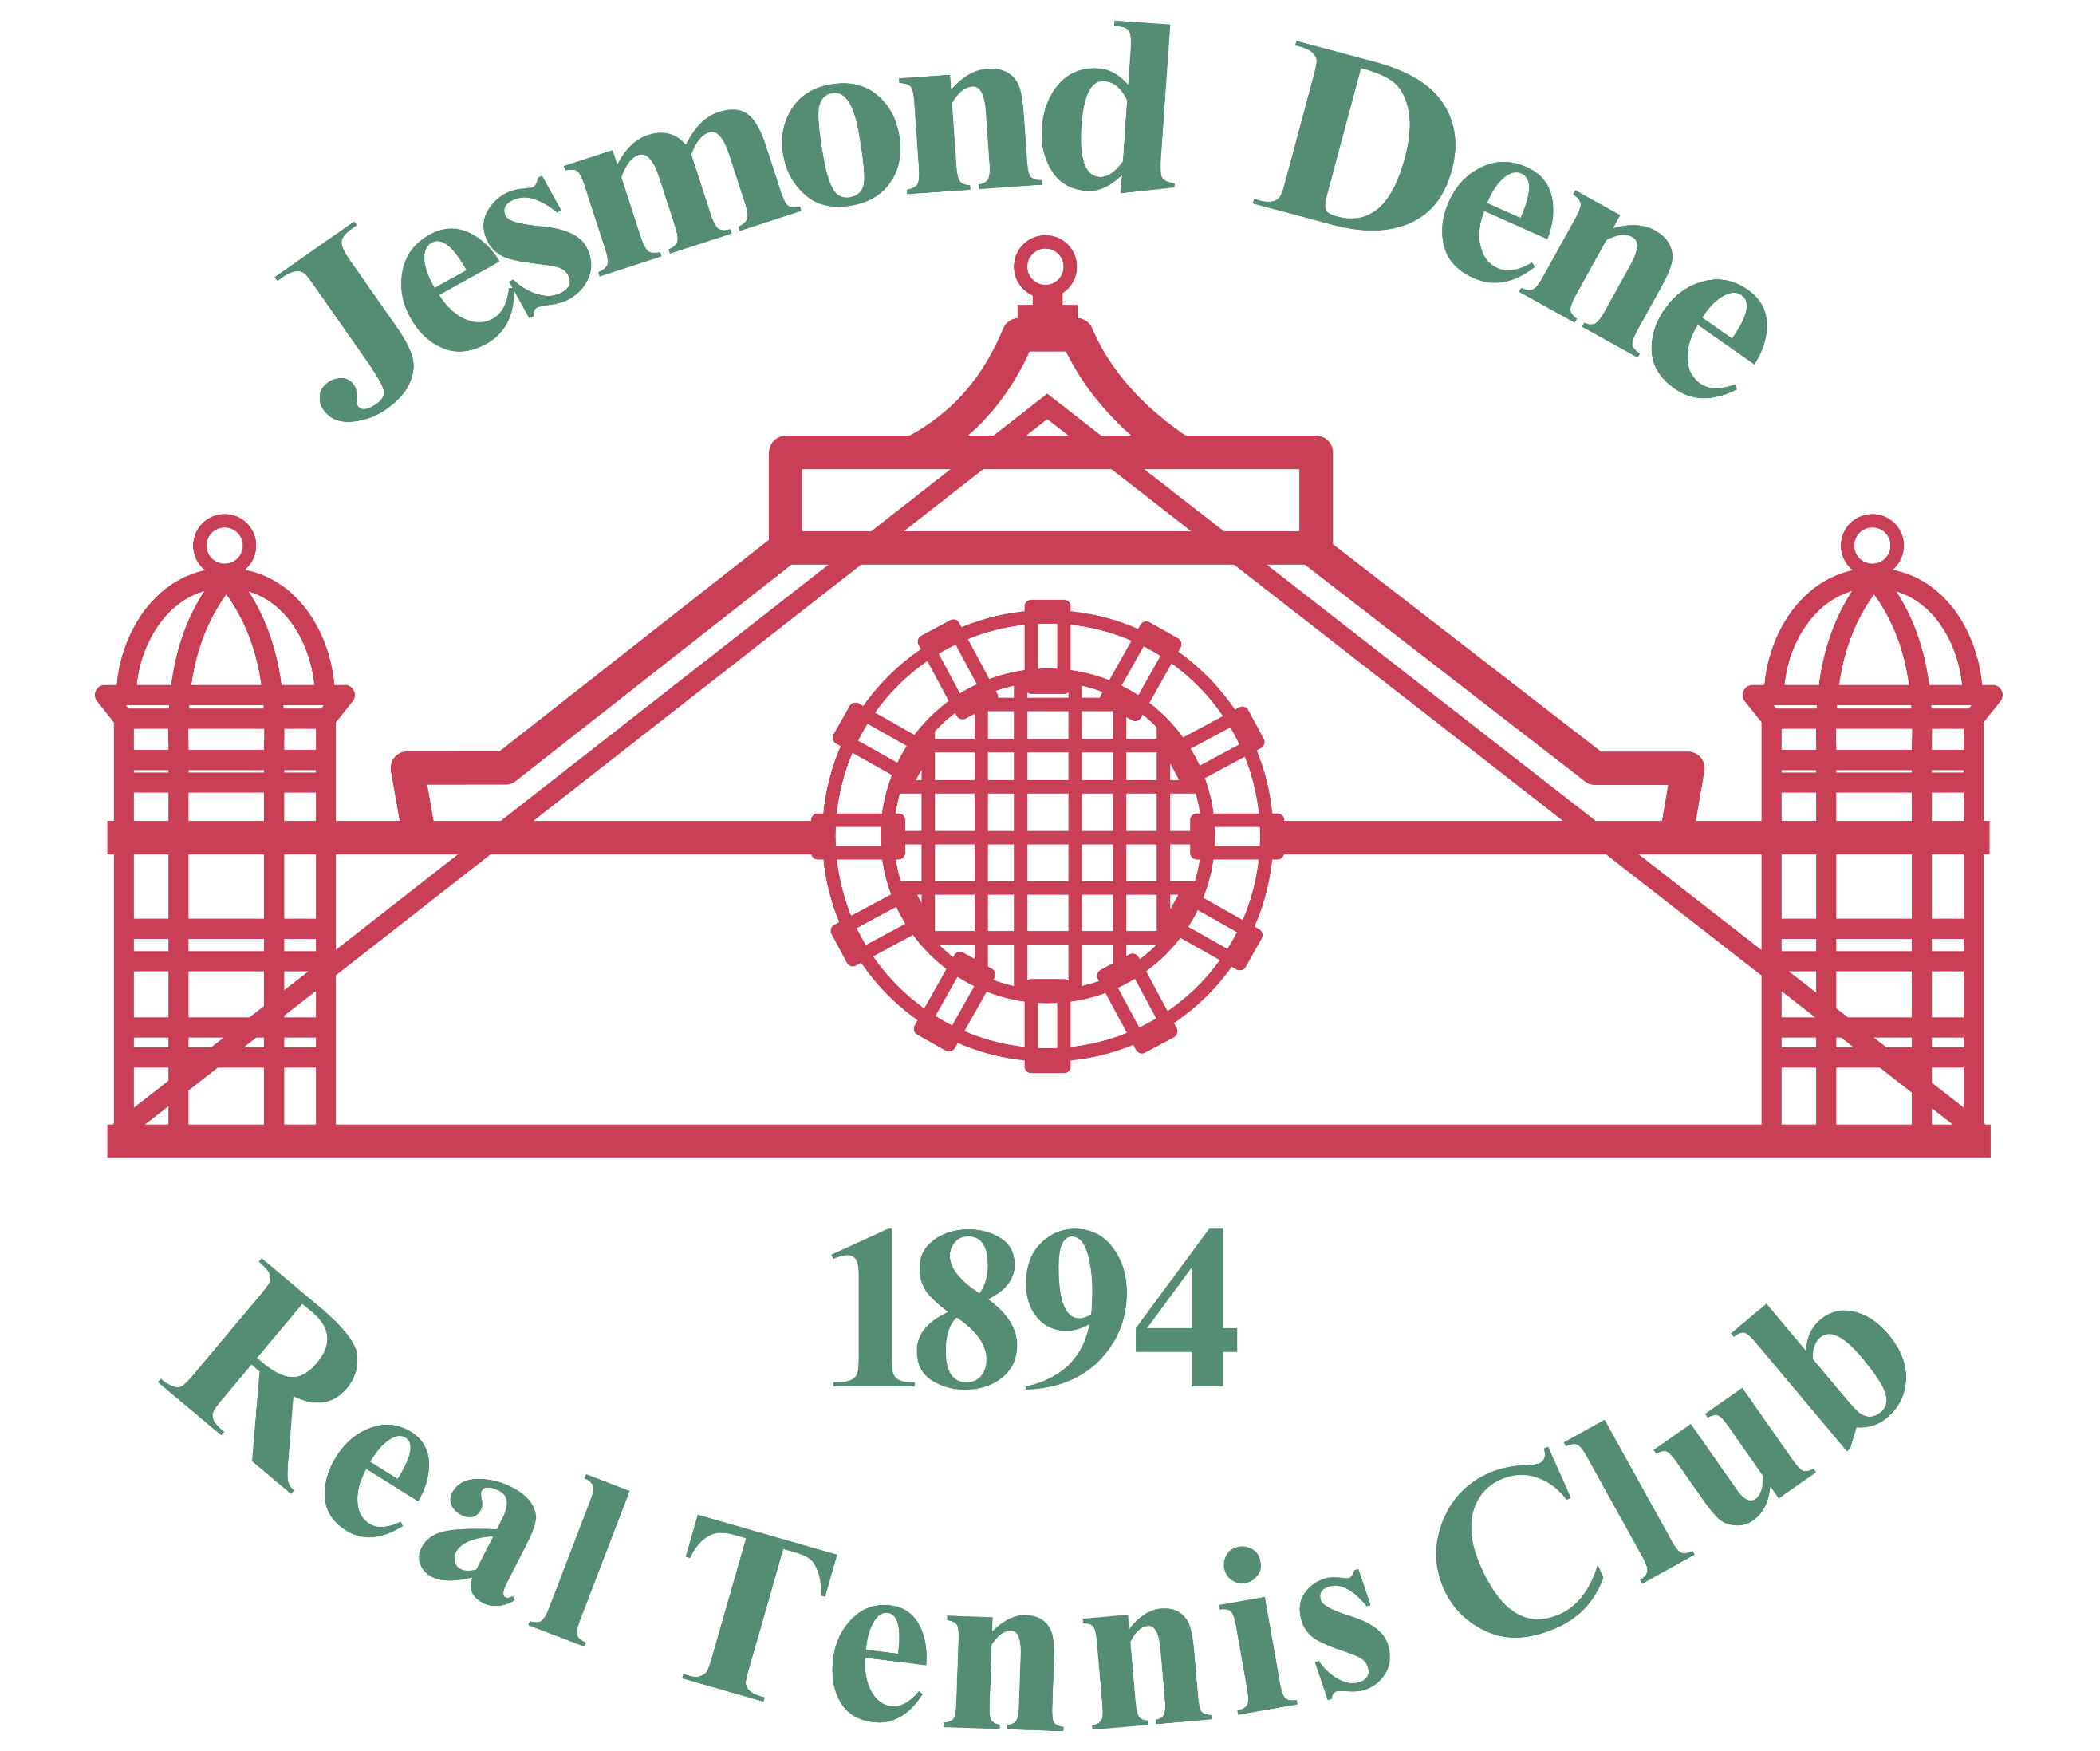 Jesmond Dene sets Northern Doubles date